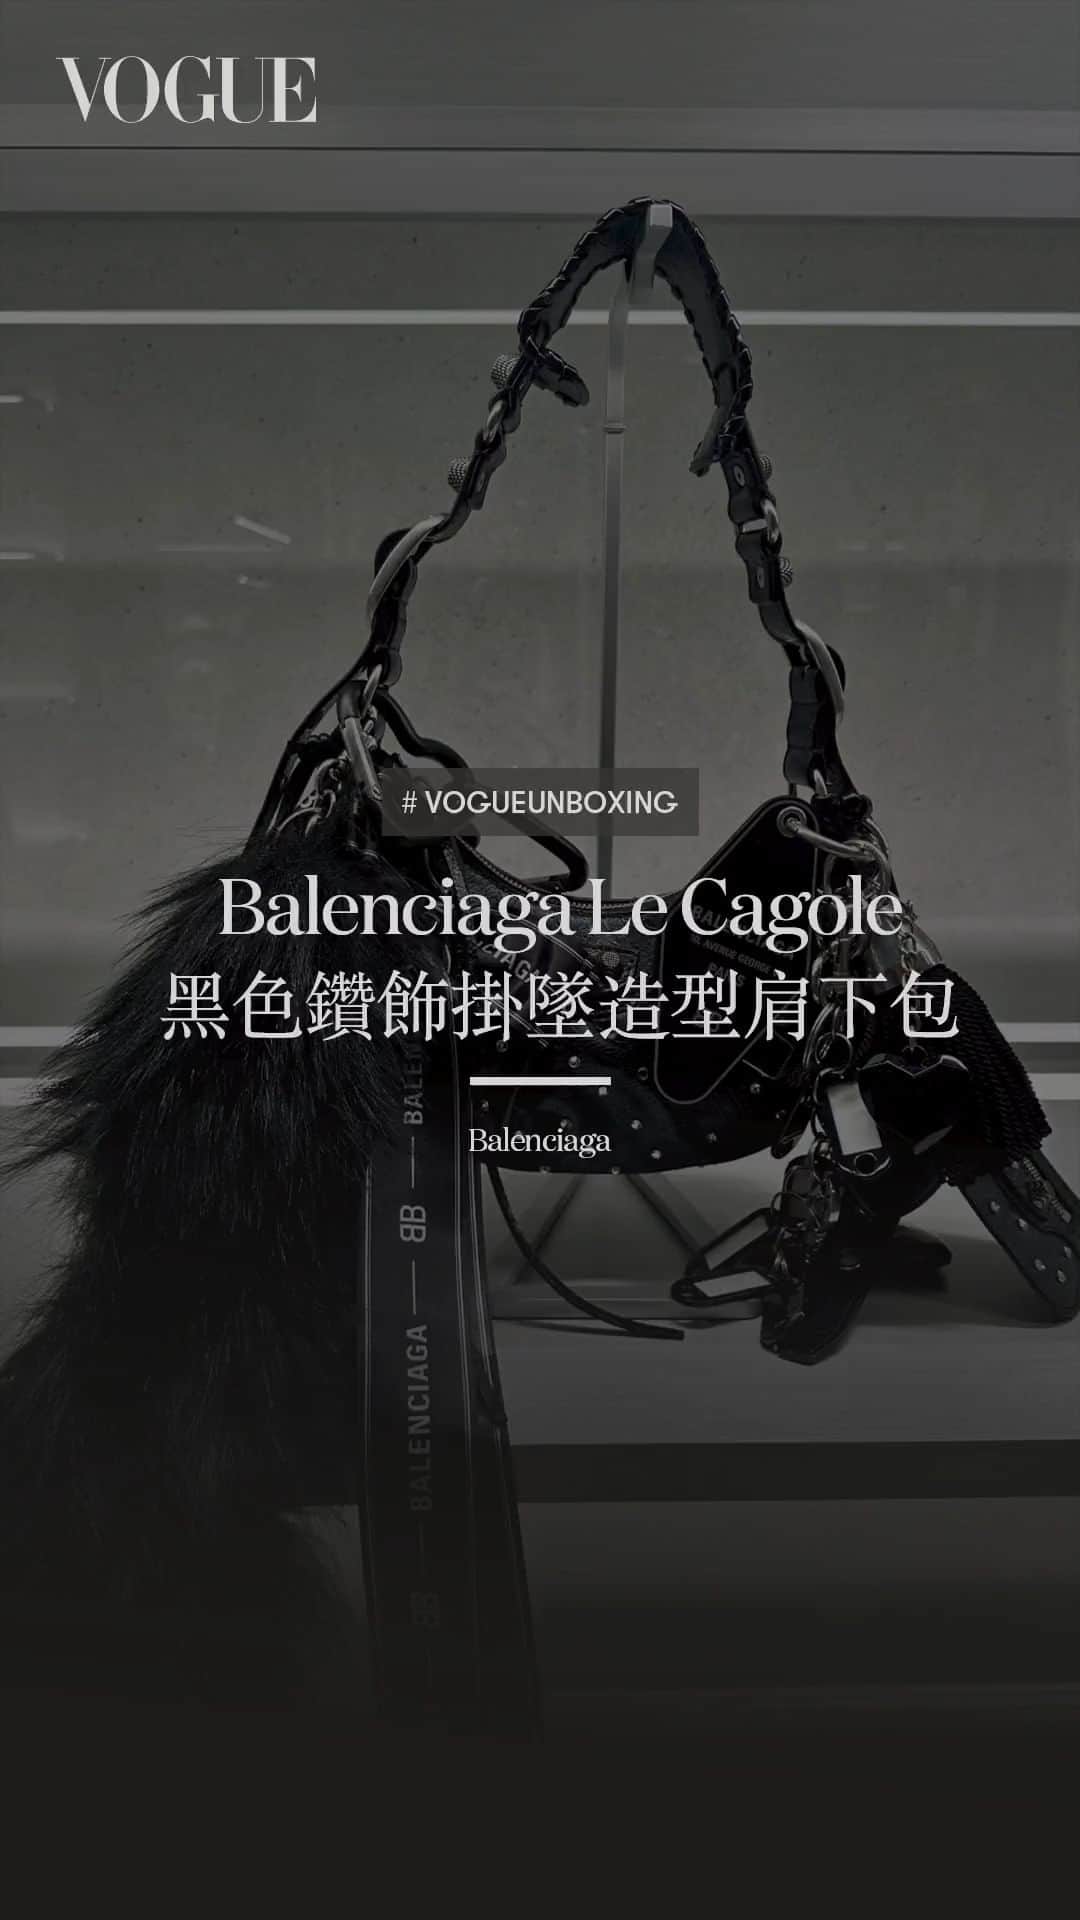 Vogue Taiwan Officialのインスタグラム：「#VogueUnboxing Balenciaga台北101新店開幕！這只「全球限量包」成焦點  Balenciaga肩下包Le Cagole有多受歡迎眾所周知。Le Cagole之名源自法國俚語，意旨「過於裝扮自己的時尚達人」，他們以噴著過濃的香水、點綴浮誇的裝飾所聞名，因此這只包就像一位掛滿裝飾的法國女人，你永遠無法忽略她的存在。  這顆全台只在台北101新店發售的Le Cagole，可謂「浮誇的最高級」。半月包身外點綴無數水鑽，外加包括Balenciaga吊牌、蝴蝶結、絨毛、飯店門牌、小卡夾等眾多掛飾，完全時髦大升級。  快來台北101三樓 Balenciaga 全新專賣店逛逛！  #Balenciaga #BalenciagaLeCagole」